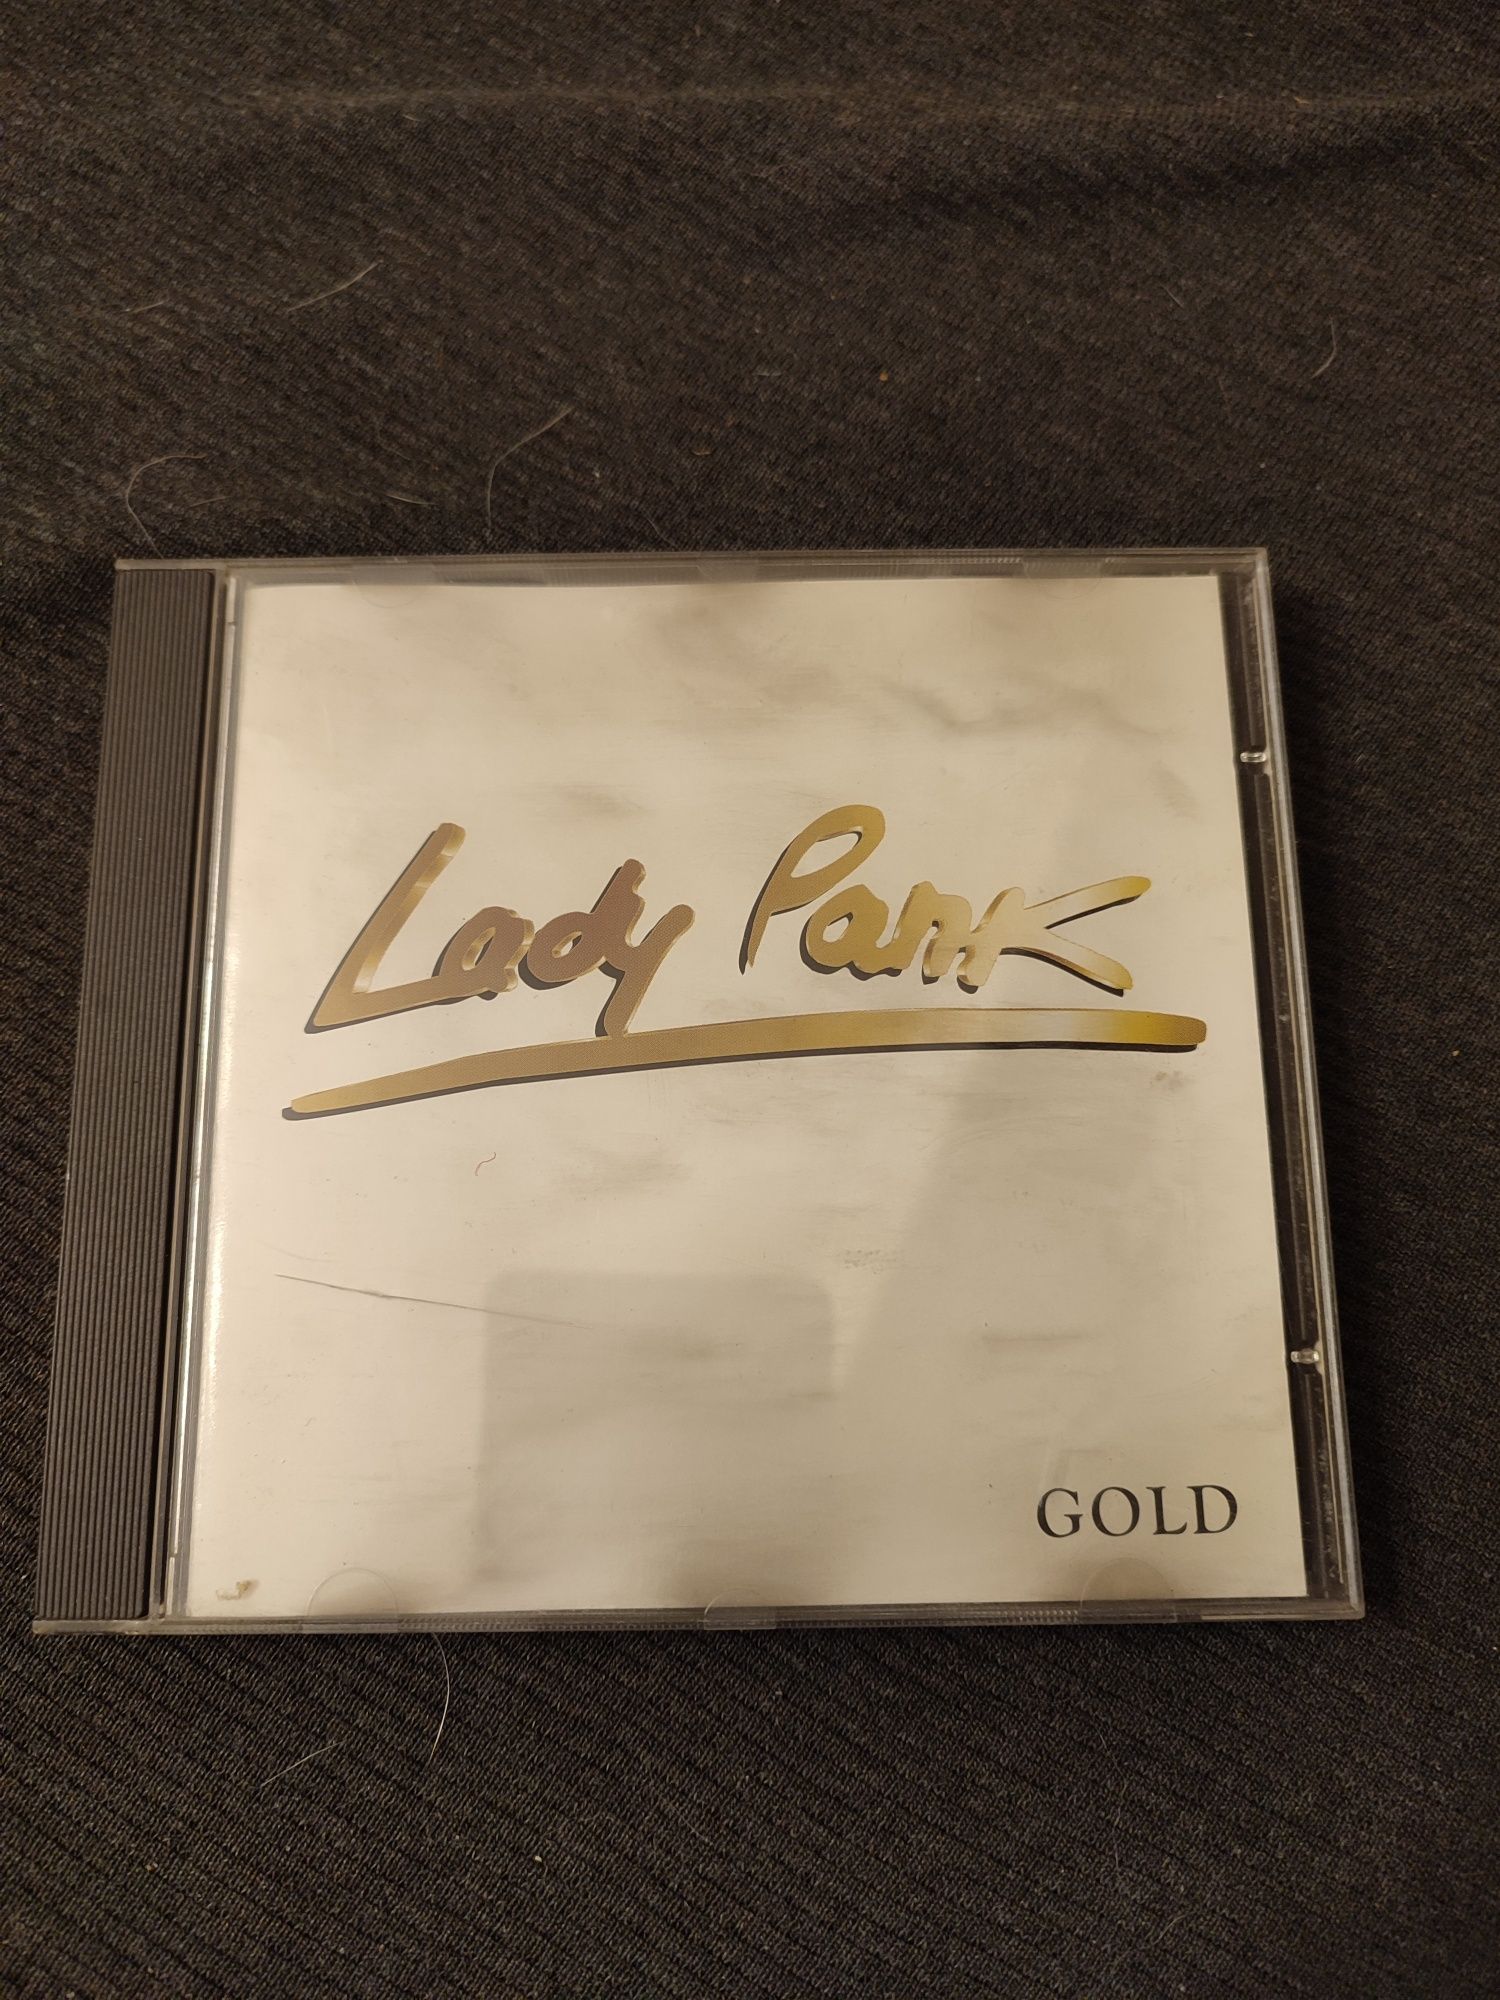 Lady Pank - Gold - CD